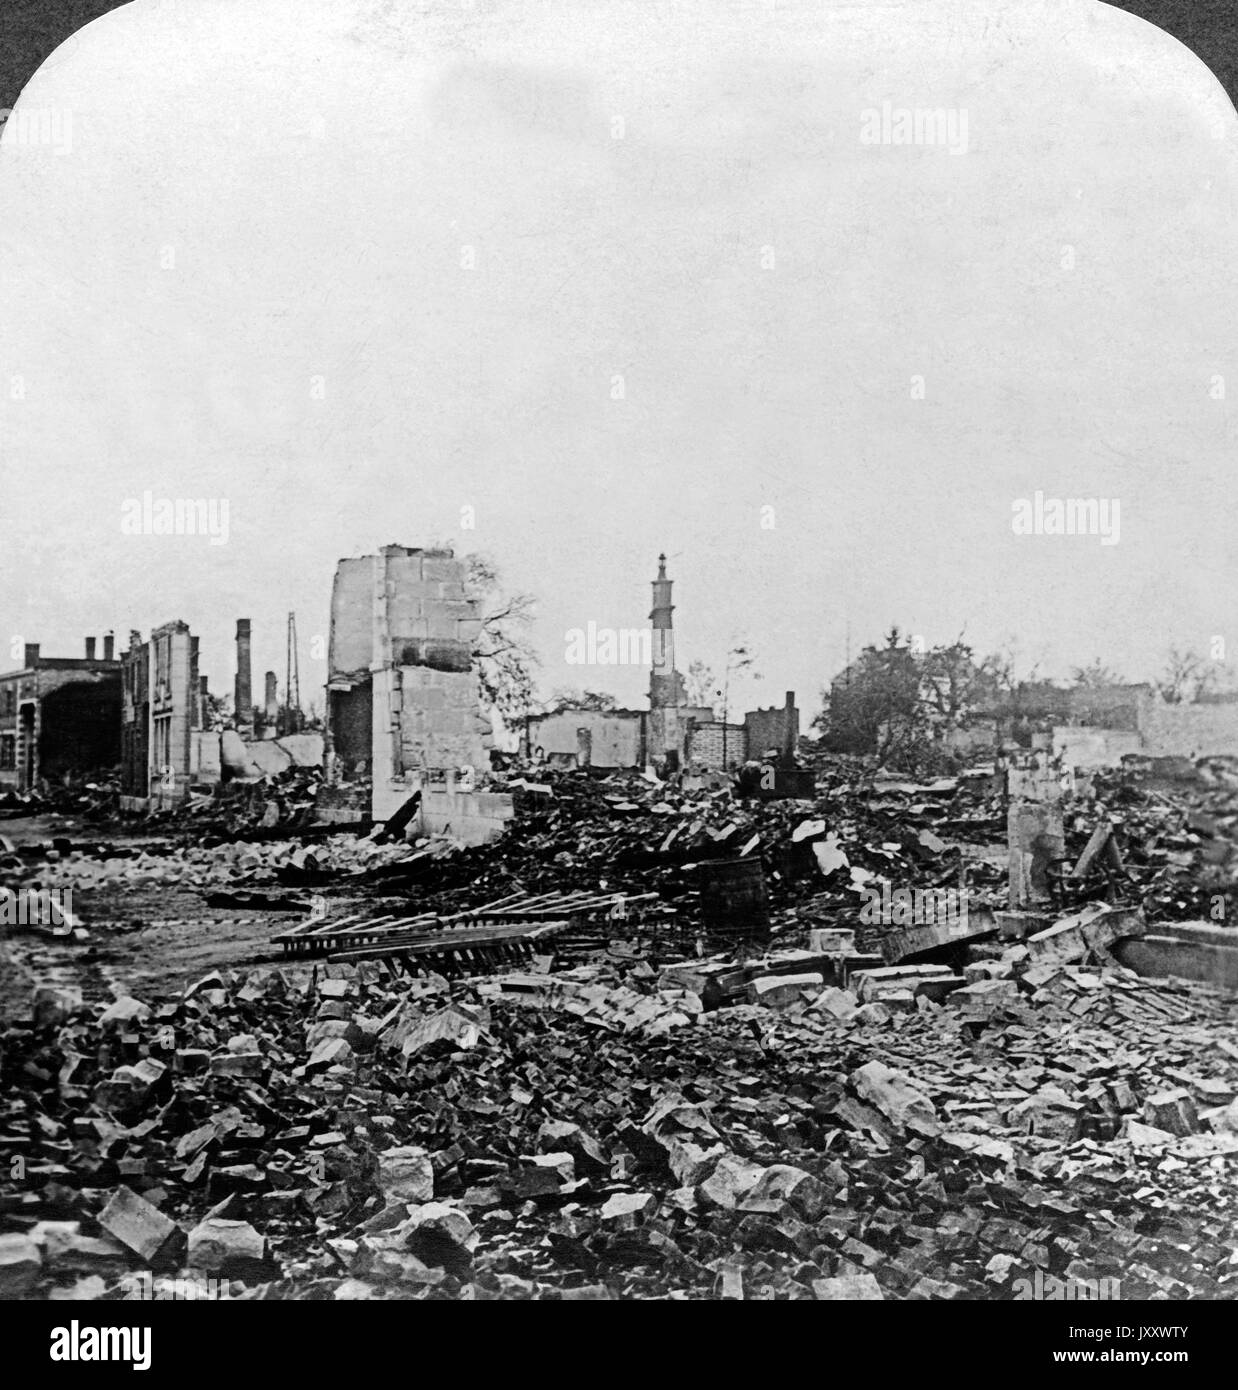 Eine durch deutsches Bombardement zerstörte belgische Stadt, Belgien 1915. A Belgian city levelled to the ground by German bombardment, Belgium 1915. Stock Photo